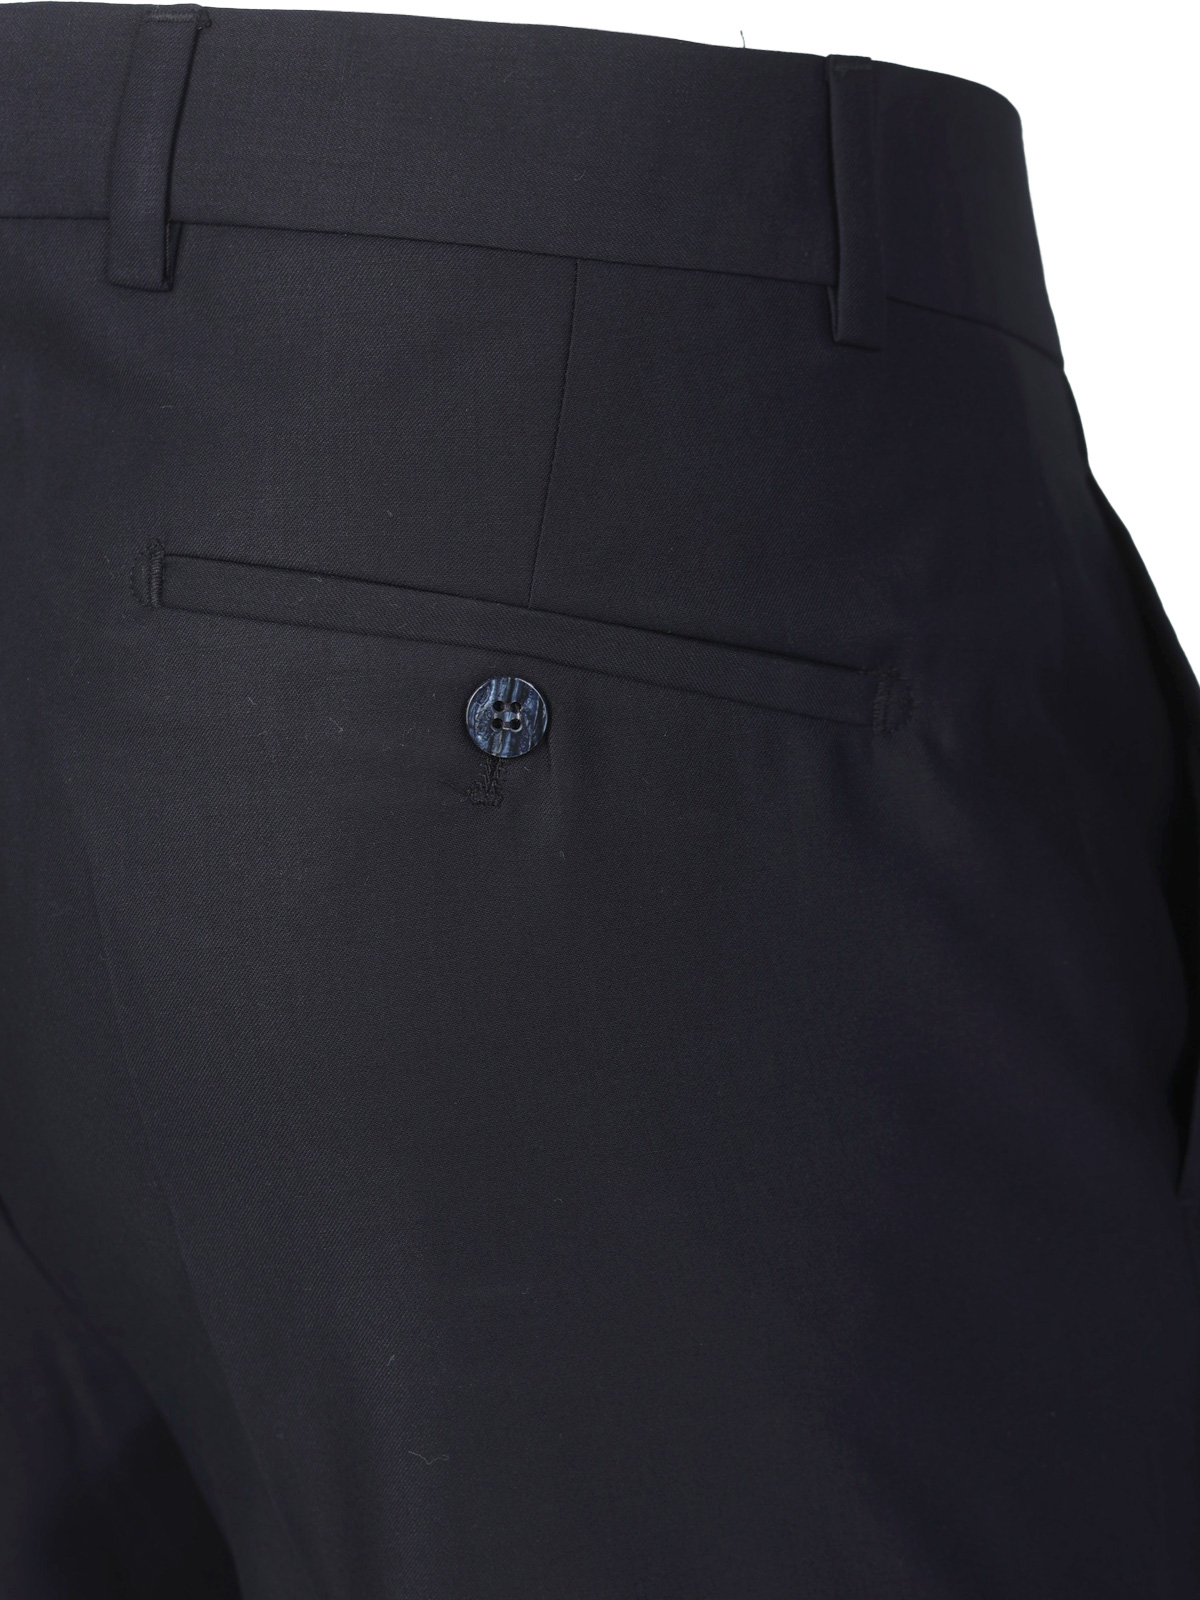 Classic pants in dark blue - 63344 € 62.99 img3